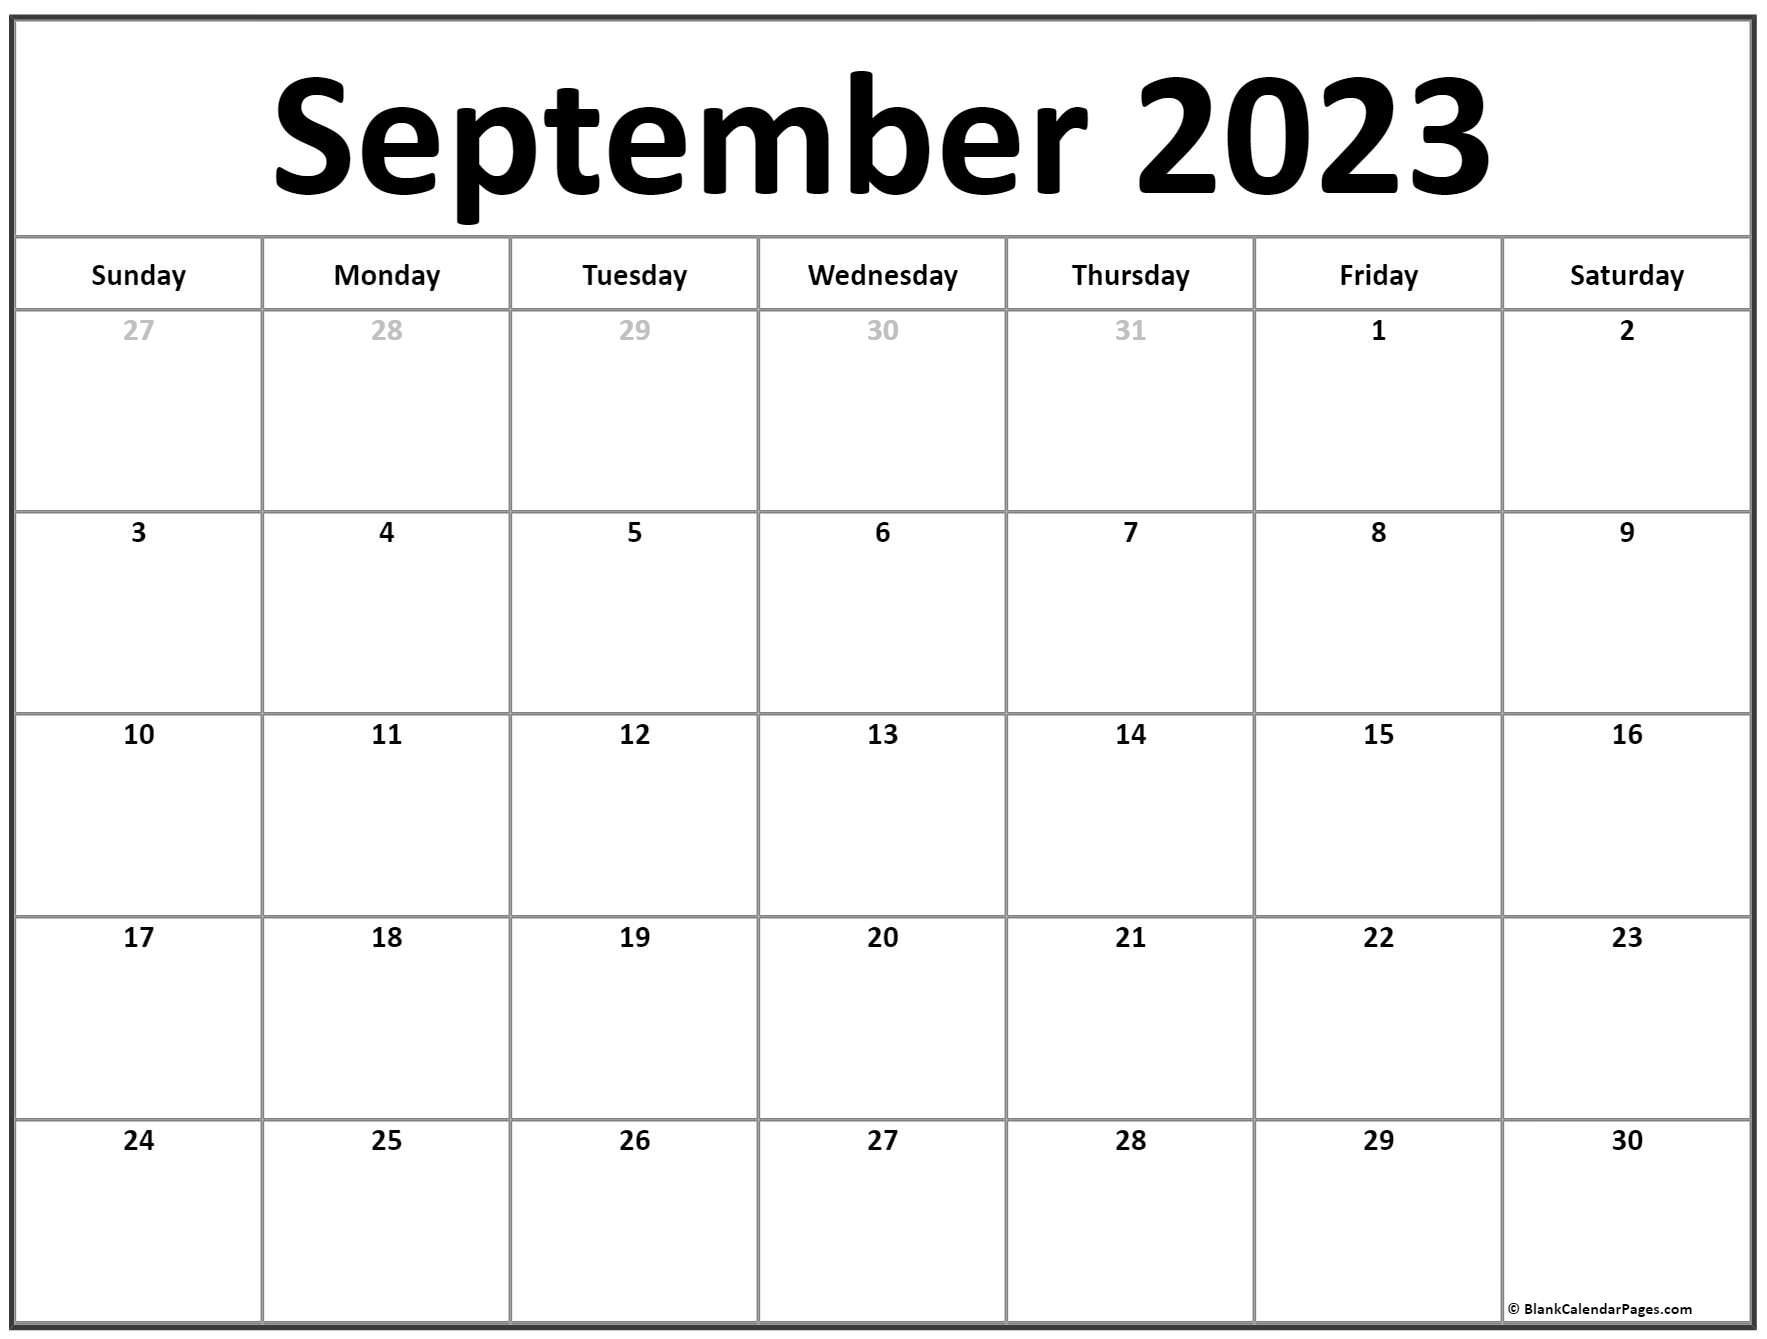 September 2023 calendar free printable calendar templates